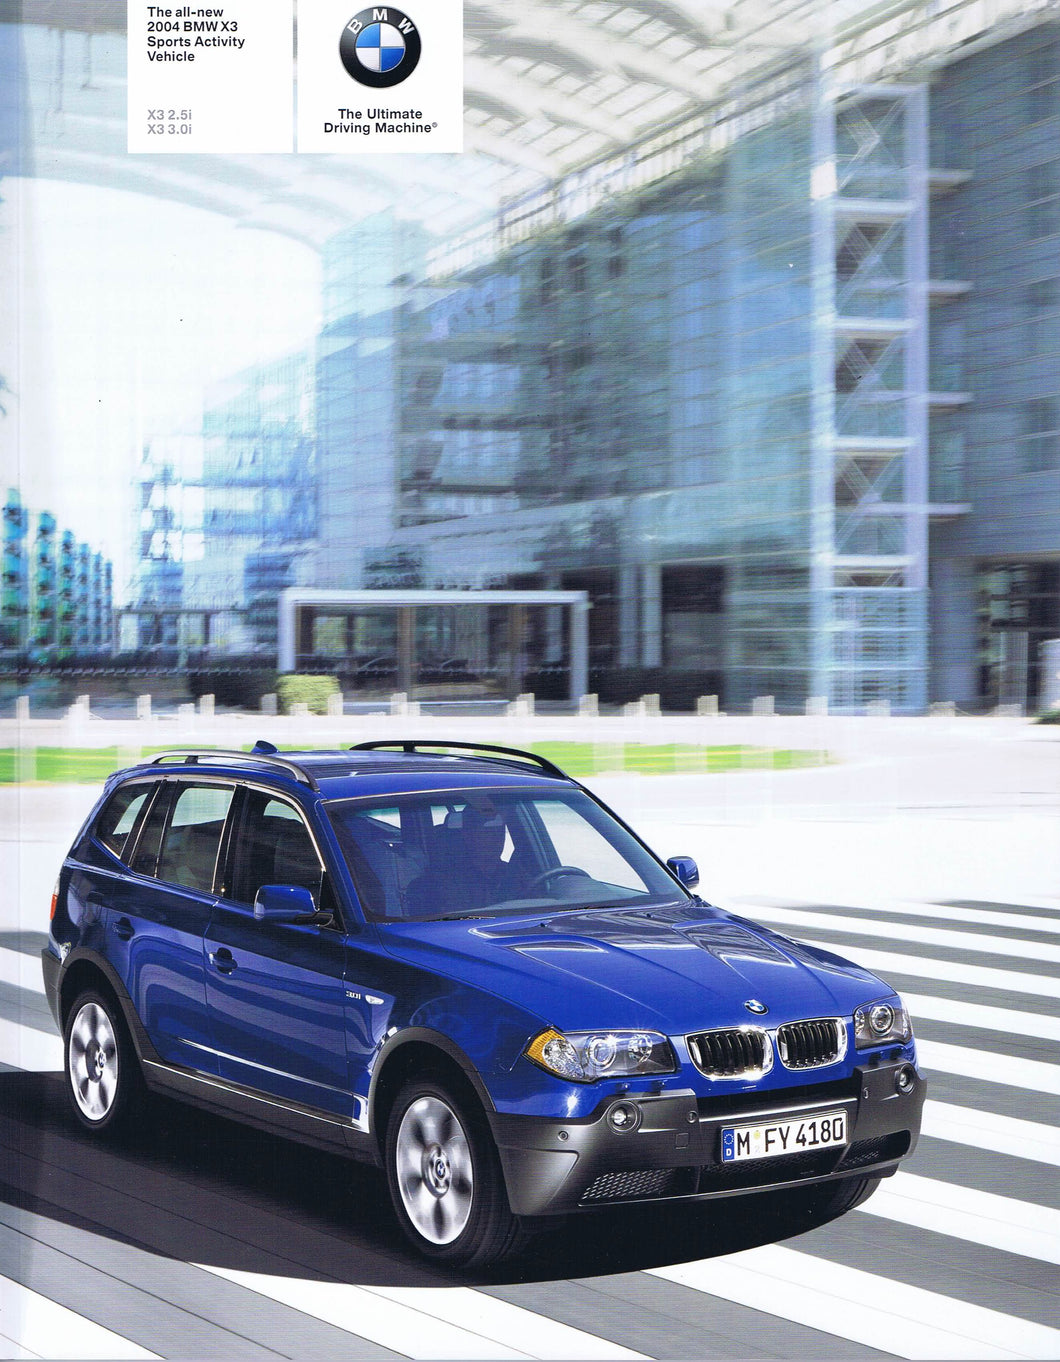 Brochure The all-new 2004 BMW X3 Sports Activity Vehicle X3 2.5i X3 3.0i - E83 Brochure (2nd version)